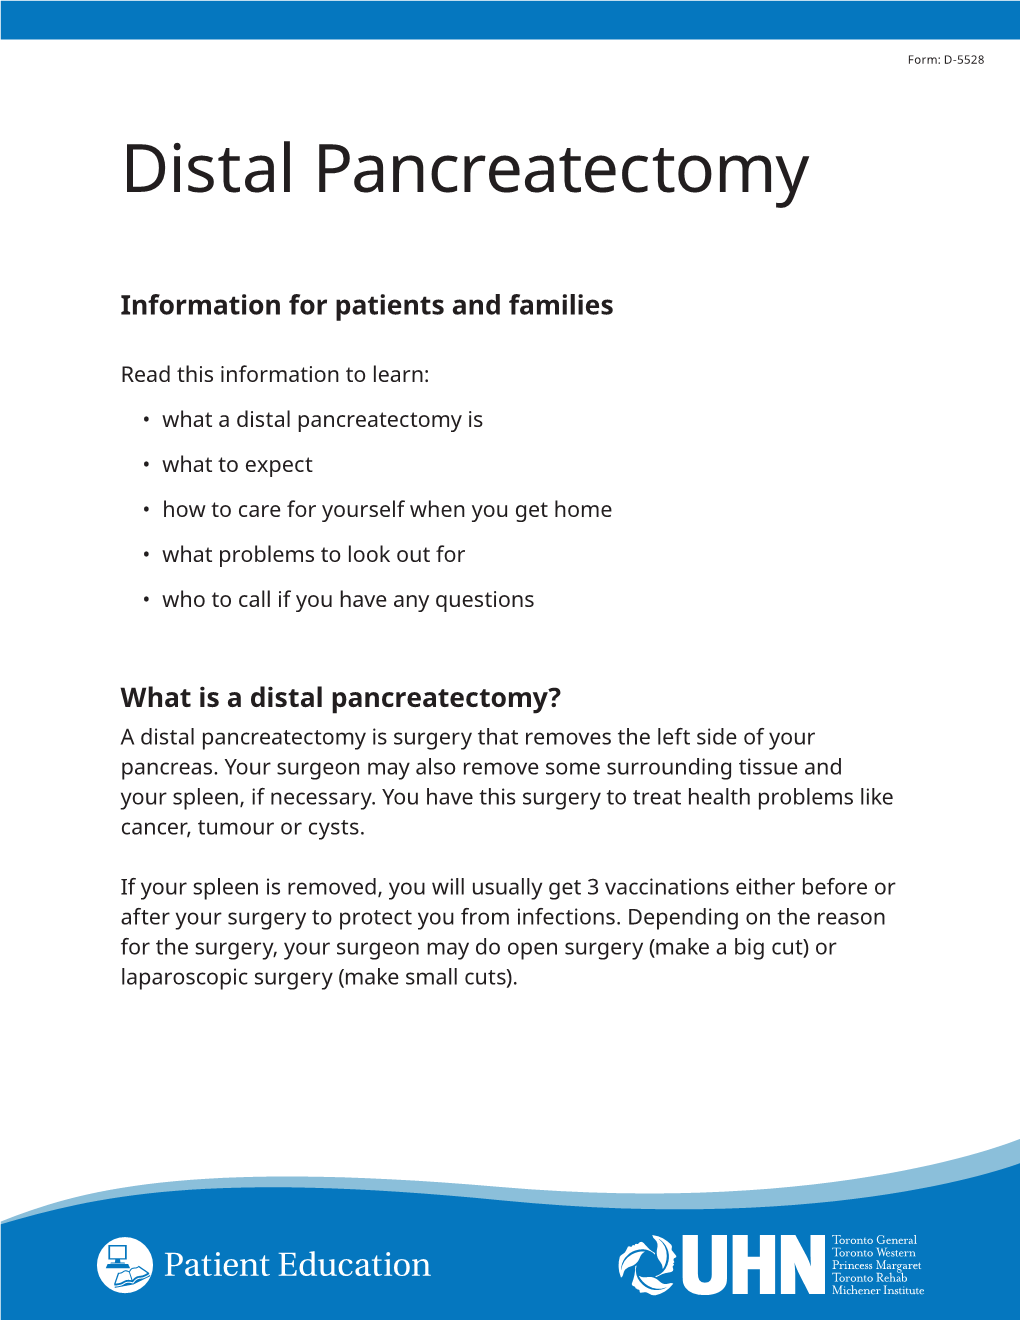 Distal Pancreatectomy